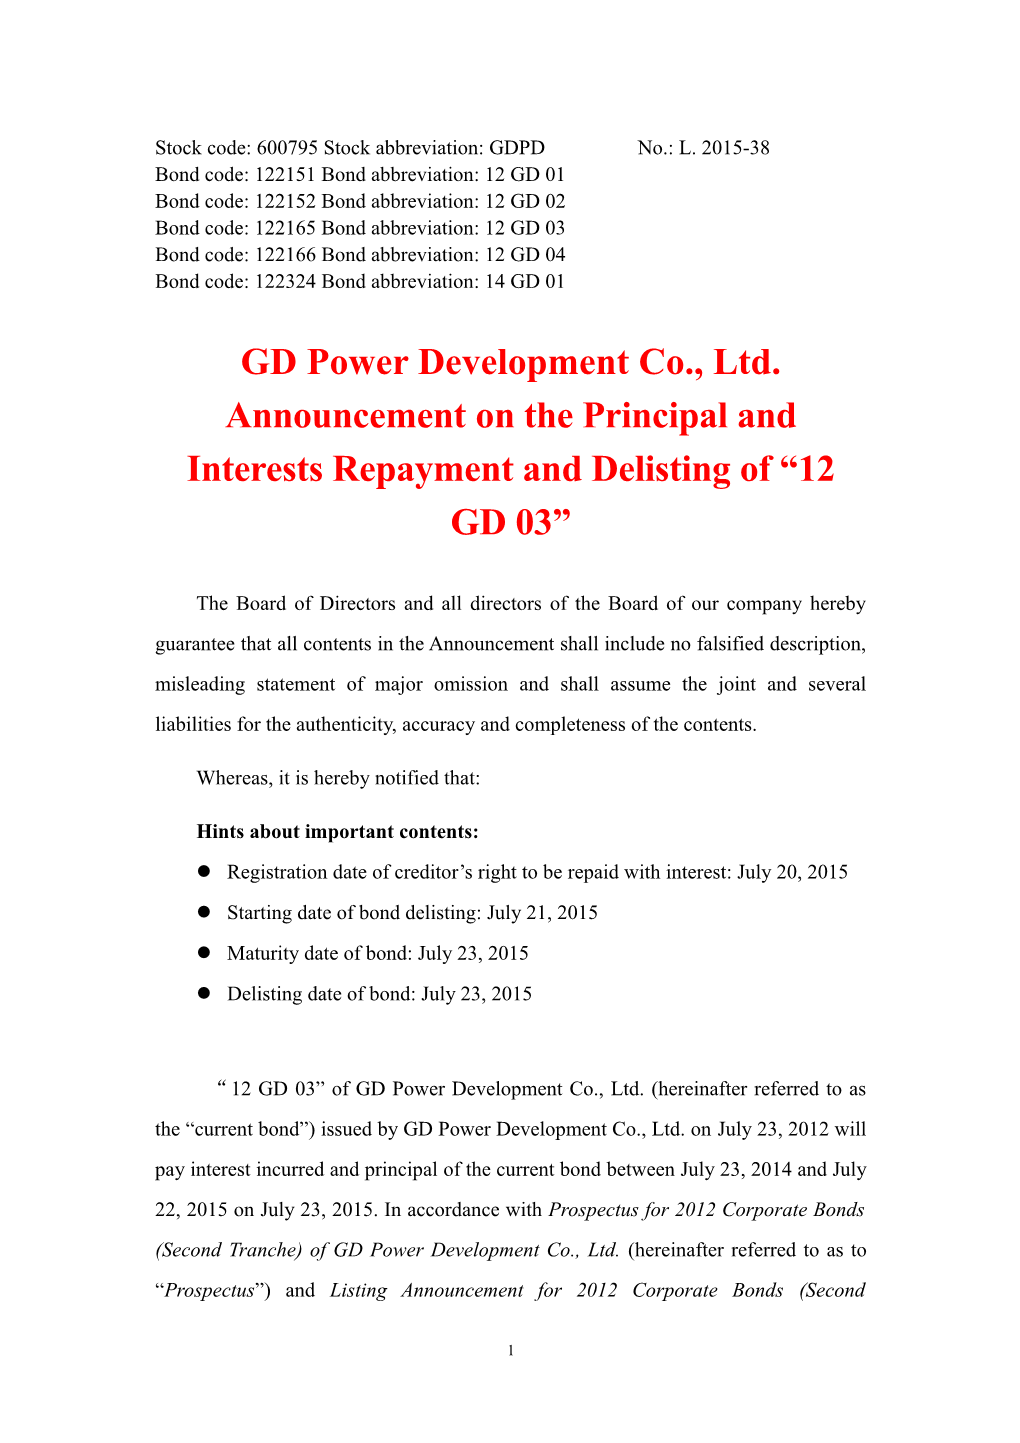 Public Announcement of GD Power Development Co., Ltd. on Principal and Interests Repayment